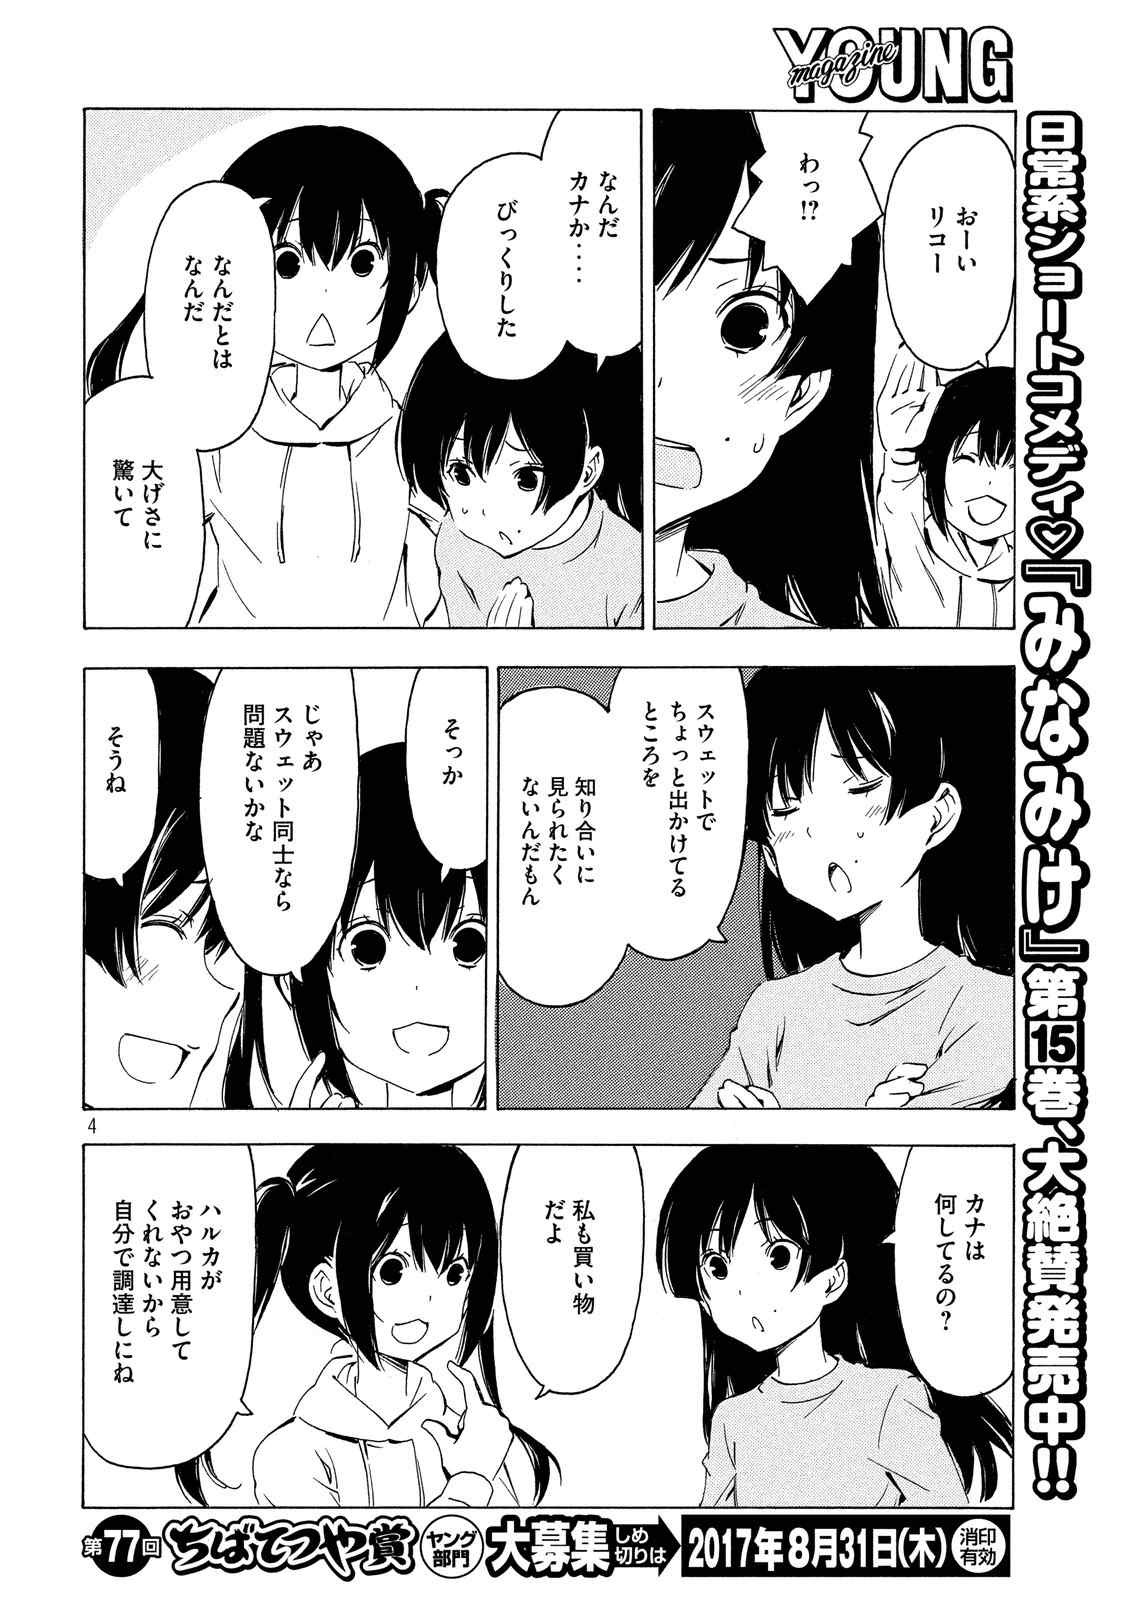 Minami-ke - Chapter 316 - Page 4